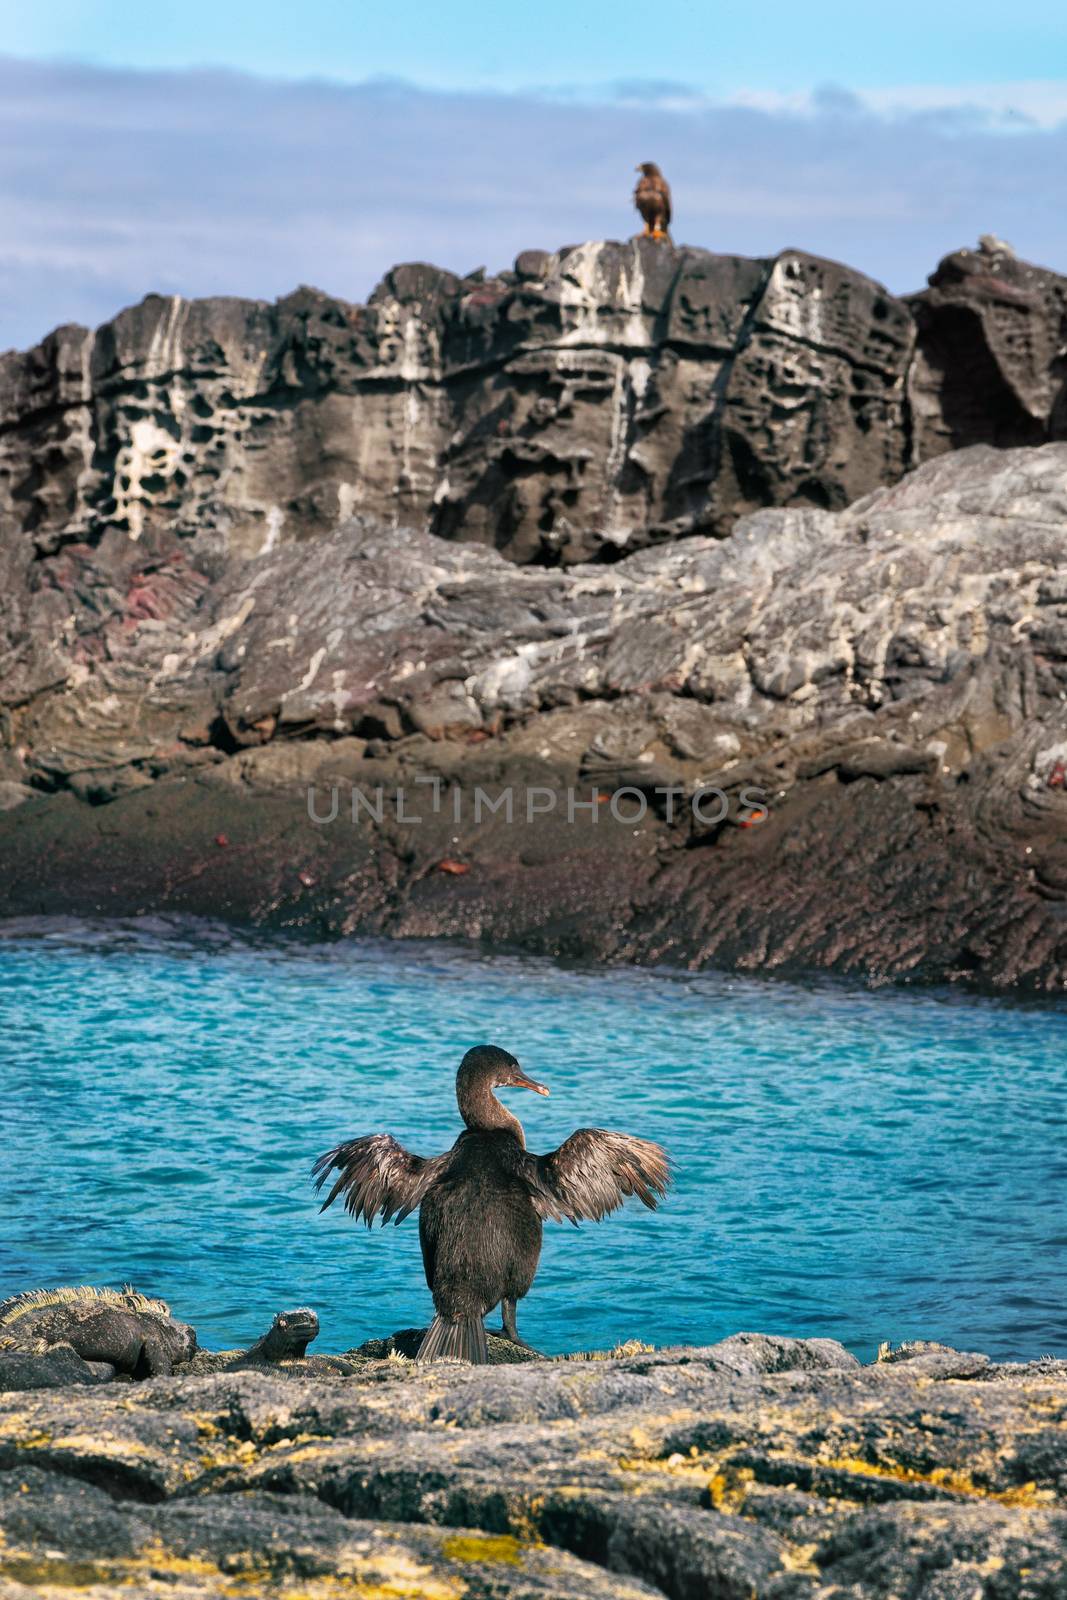 Flightless cormorant aka Galapagos cormorants among other animals and wildlife by Maridav